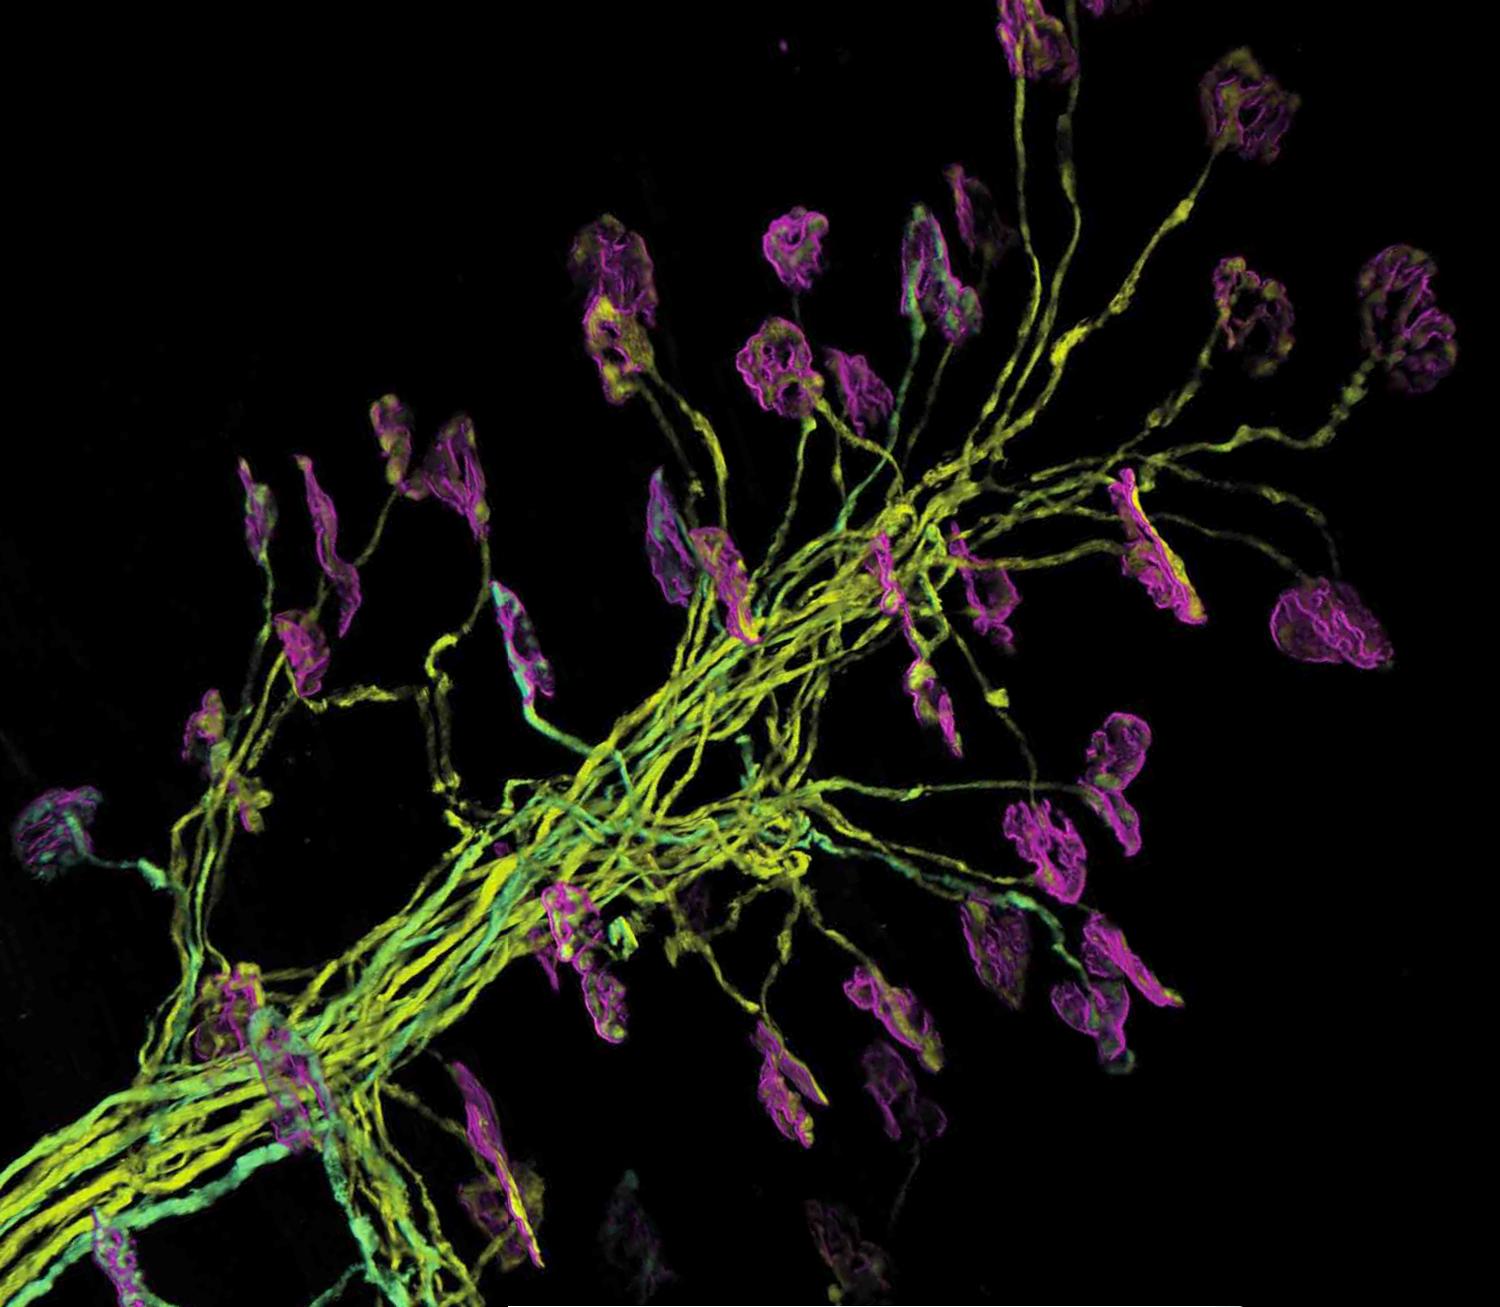 Multiphoton microscopy of mouse motor neurons